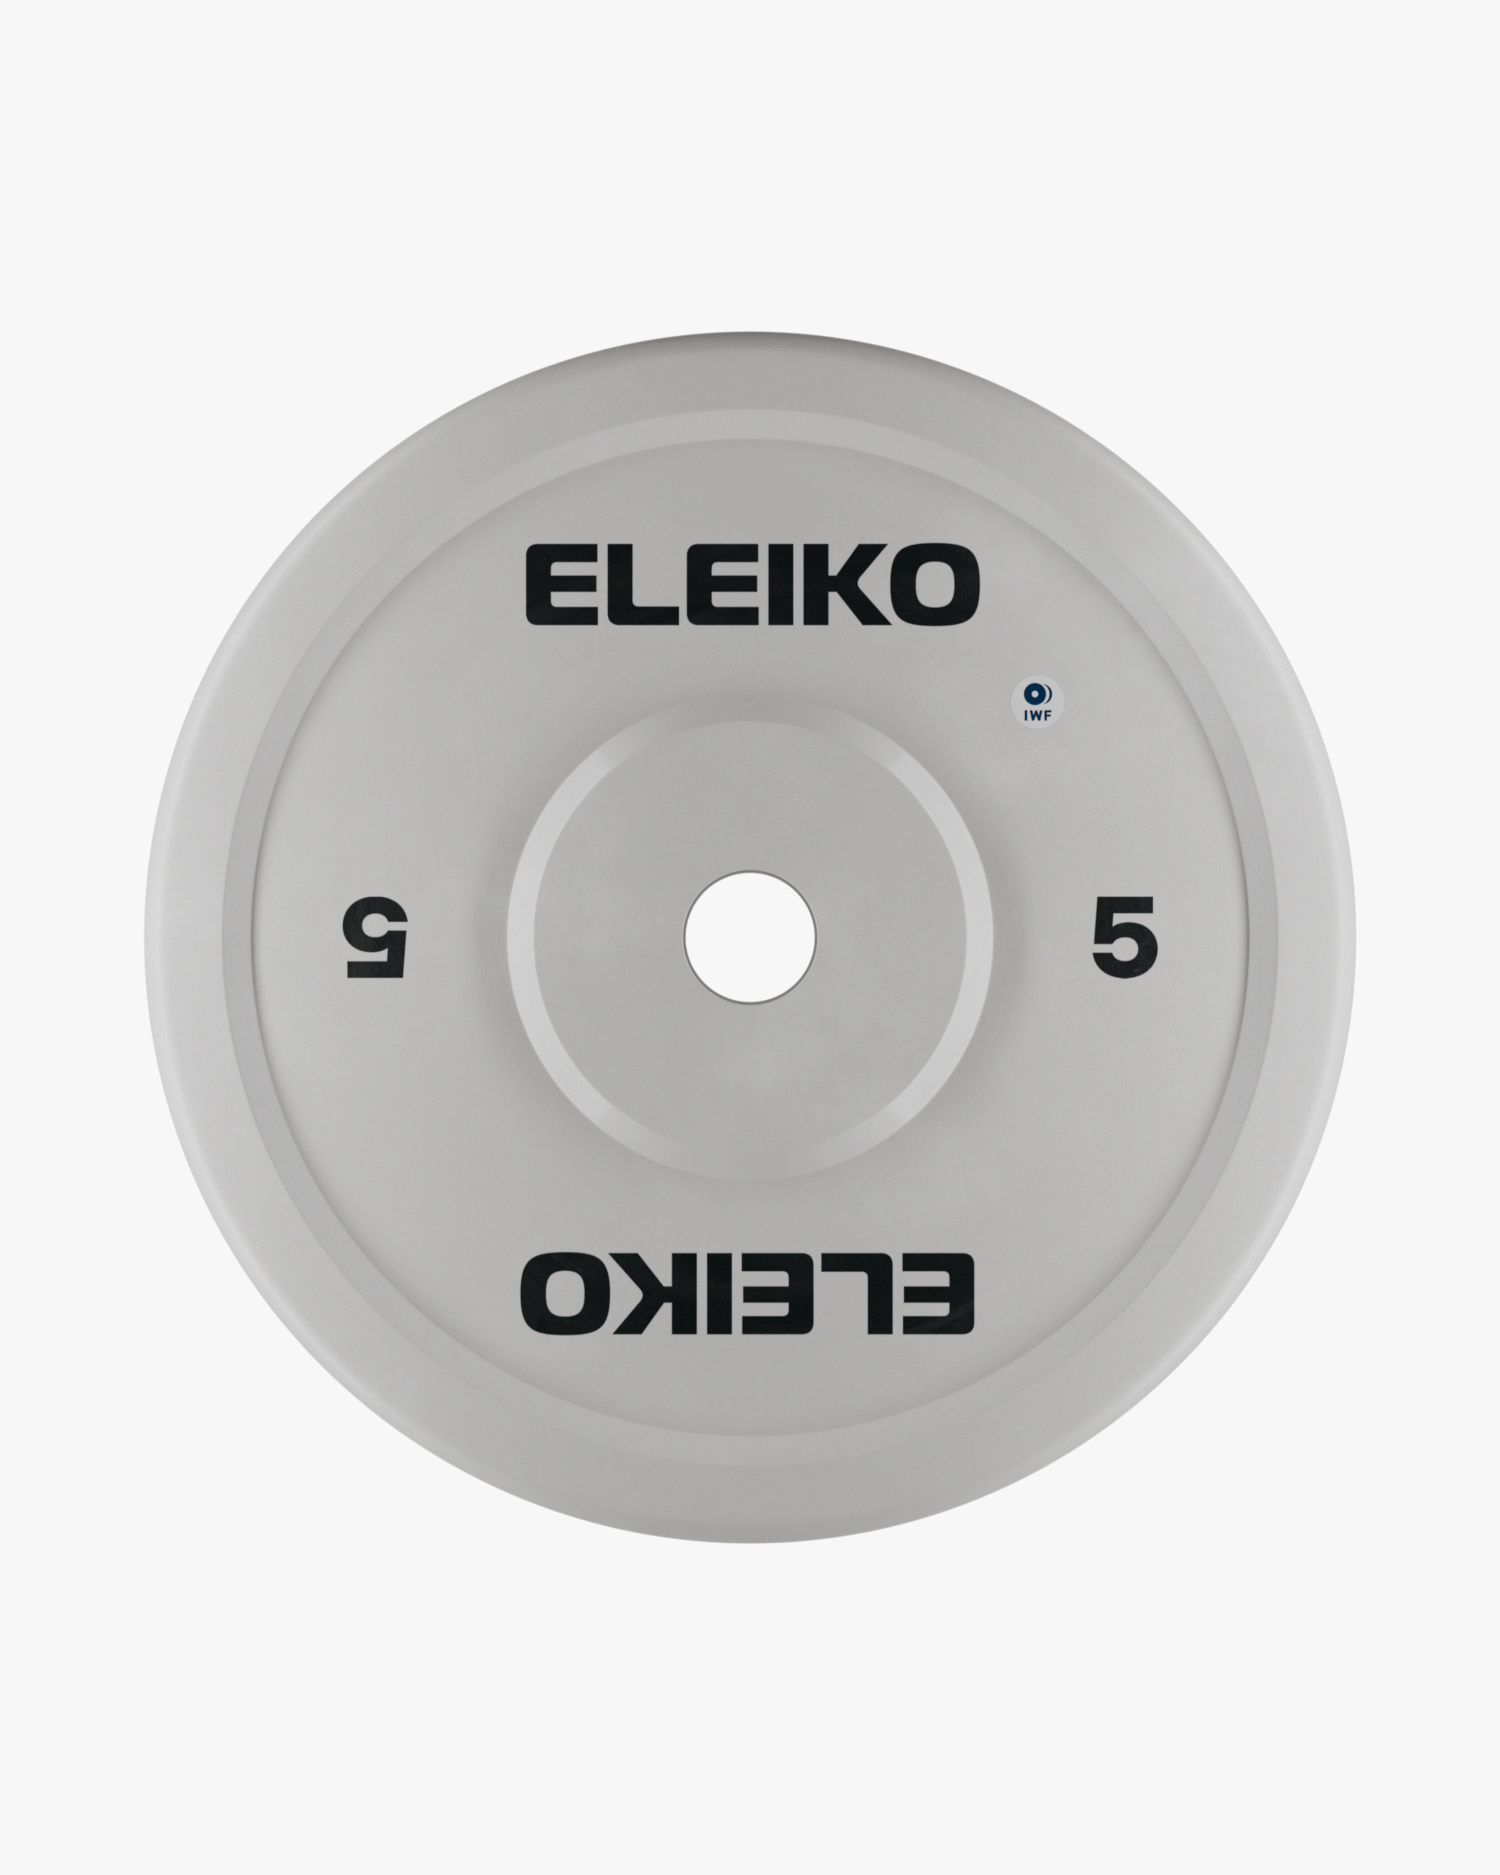 IWF Weightlifting Technique Plates | Eleiko